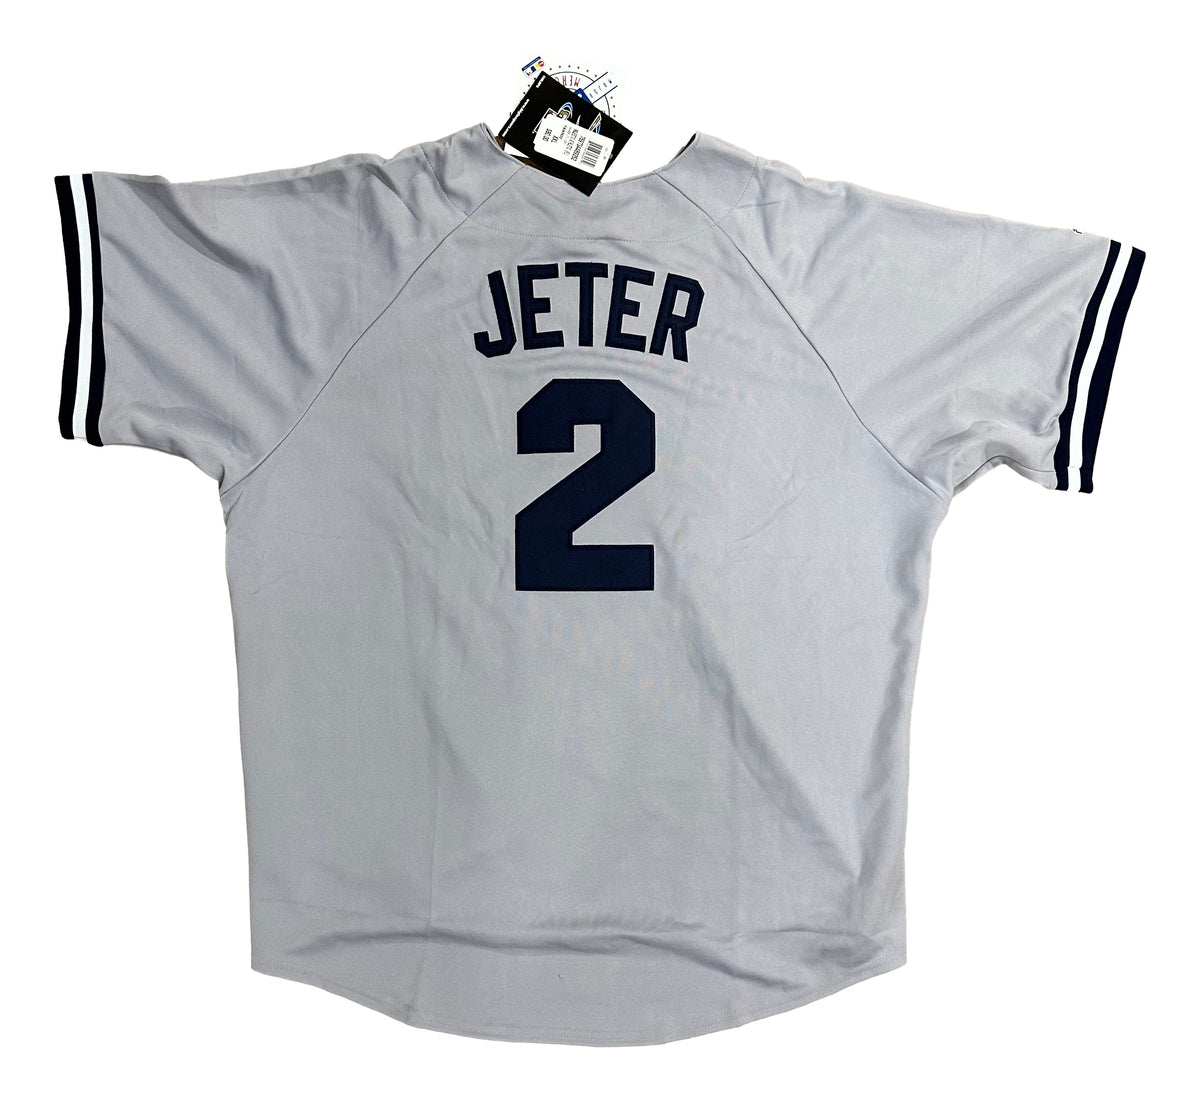 Majestic Athletic New York Yankees Baseball Shirt